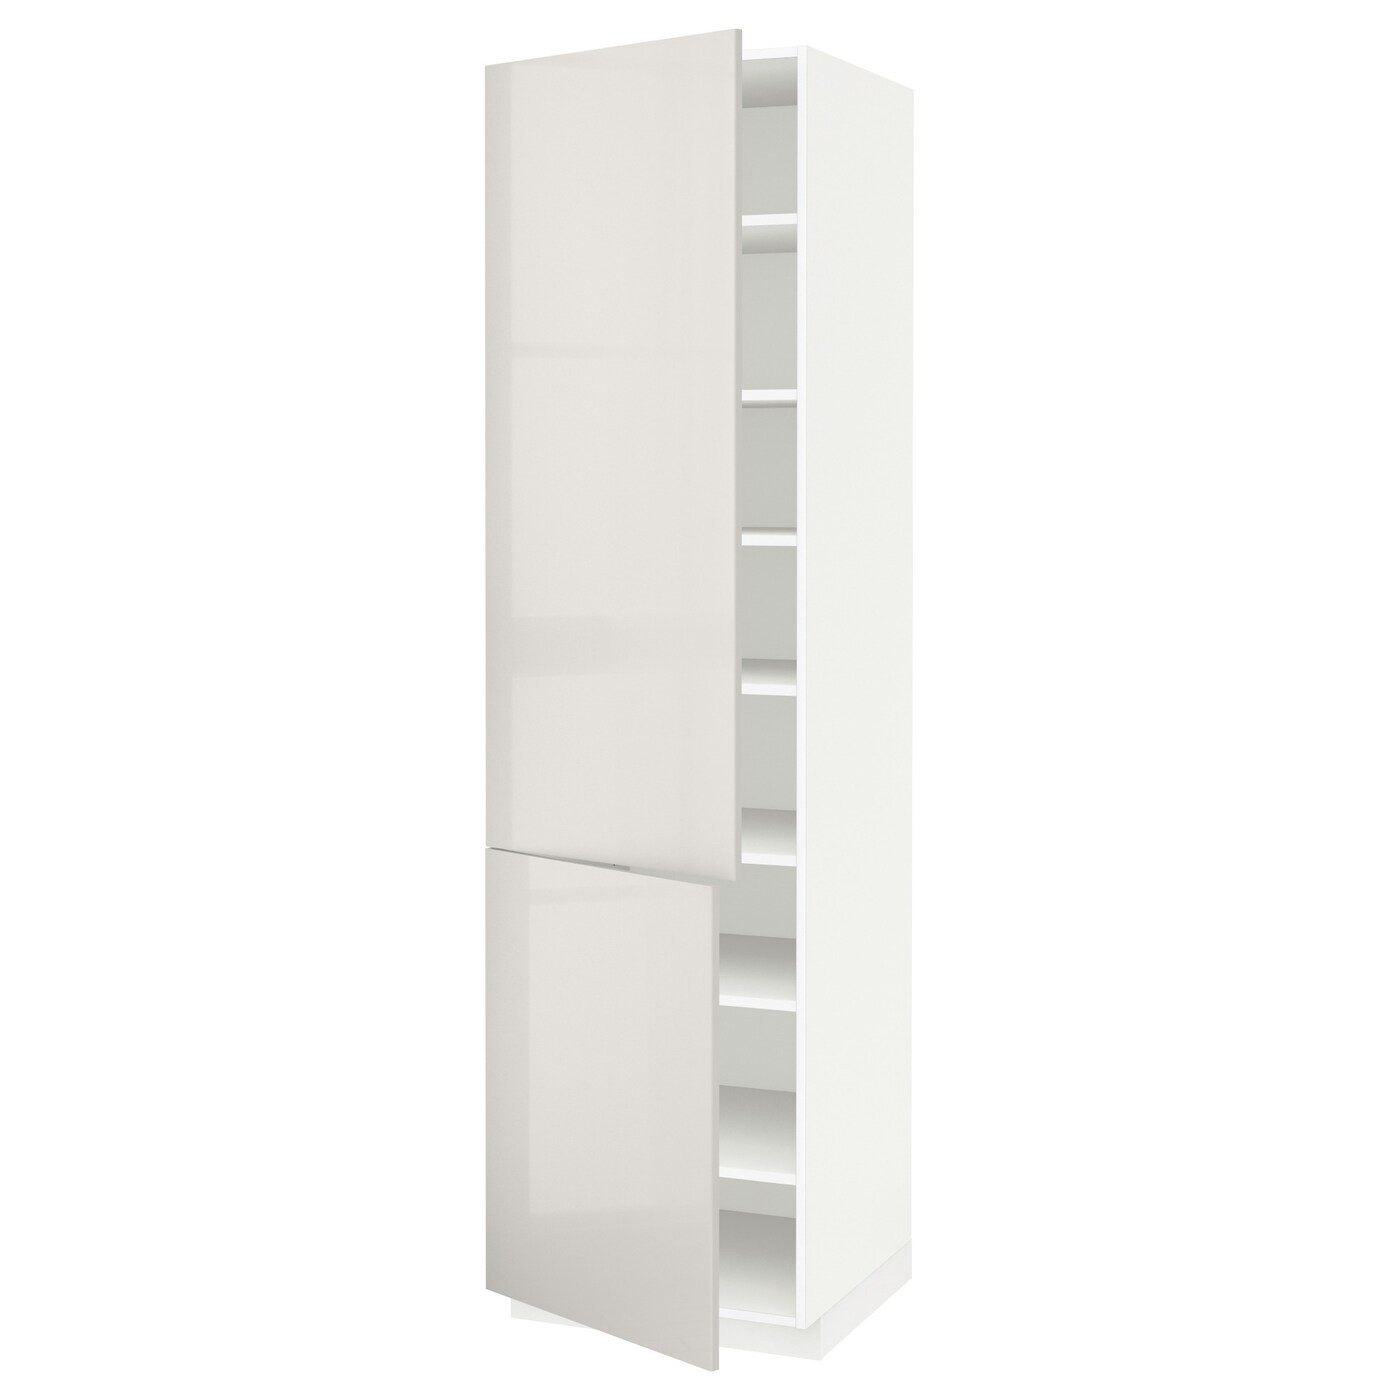 Высокий кухонный шкаф с полками - IKEA METOD/МЕТОД ИКЕА, 220х60х60 см, белый/светло-серый глянцевый